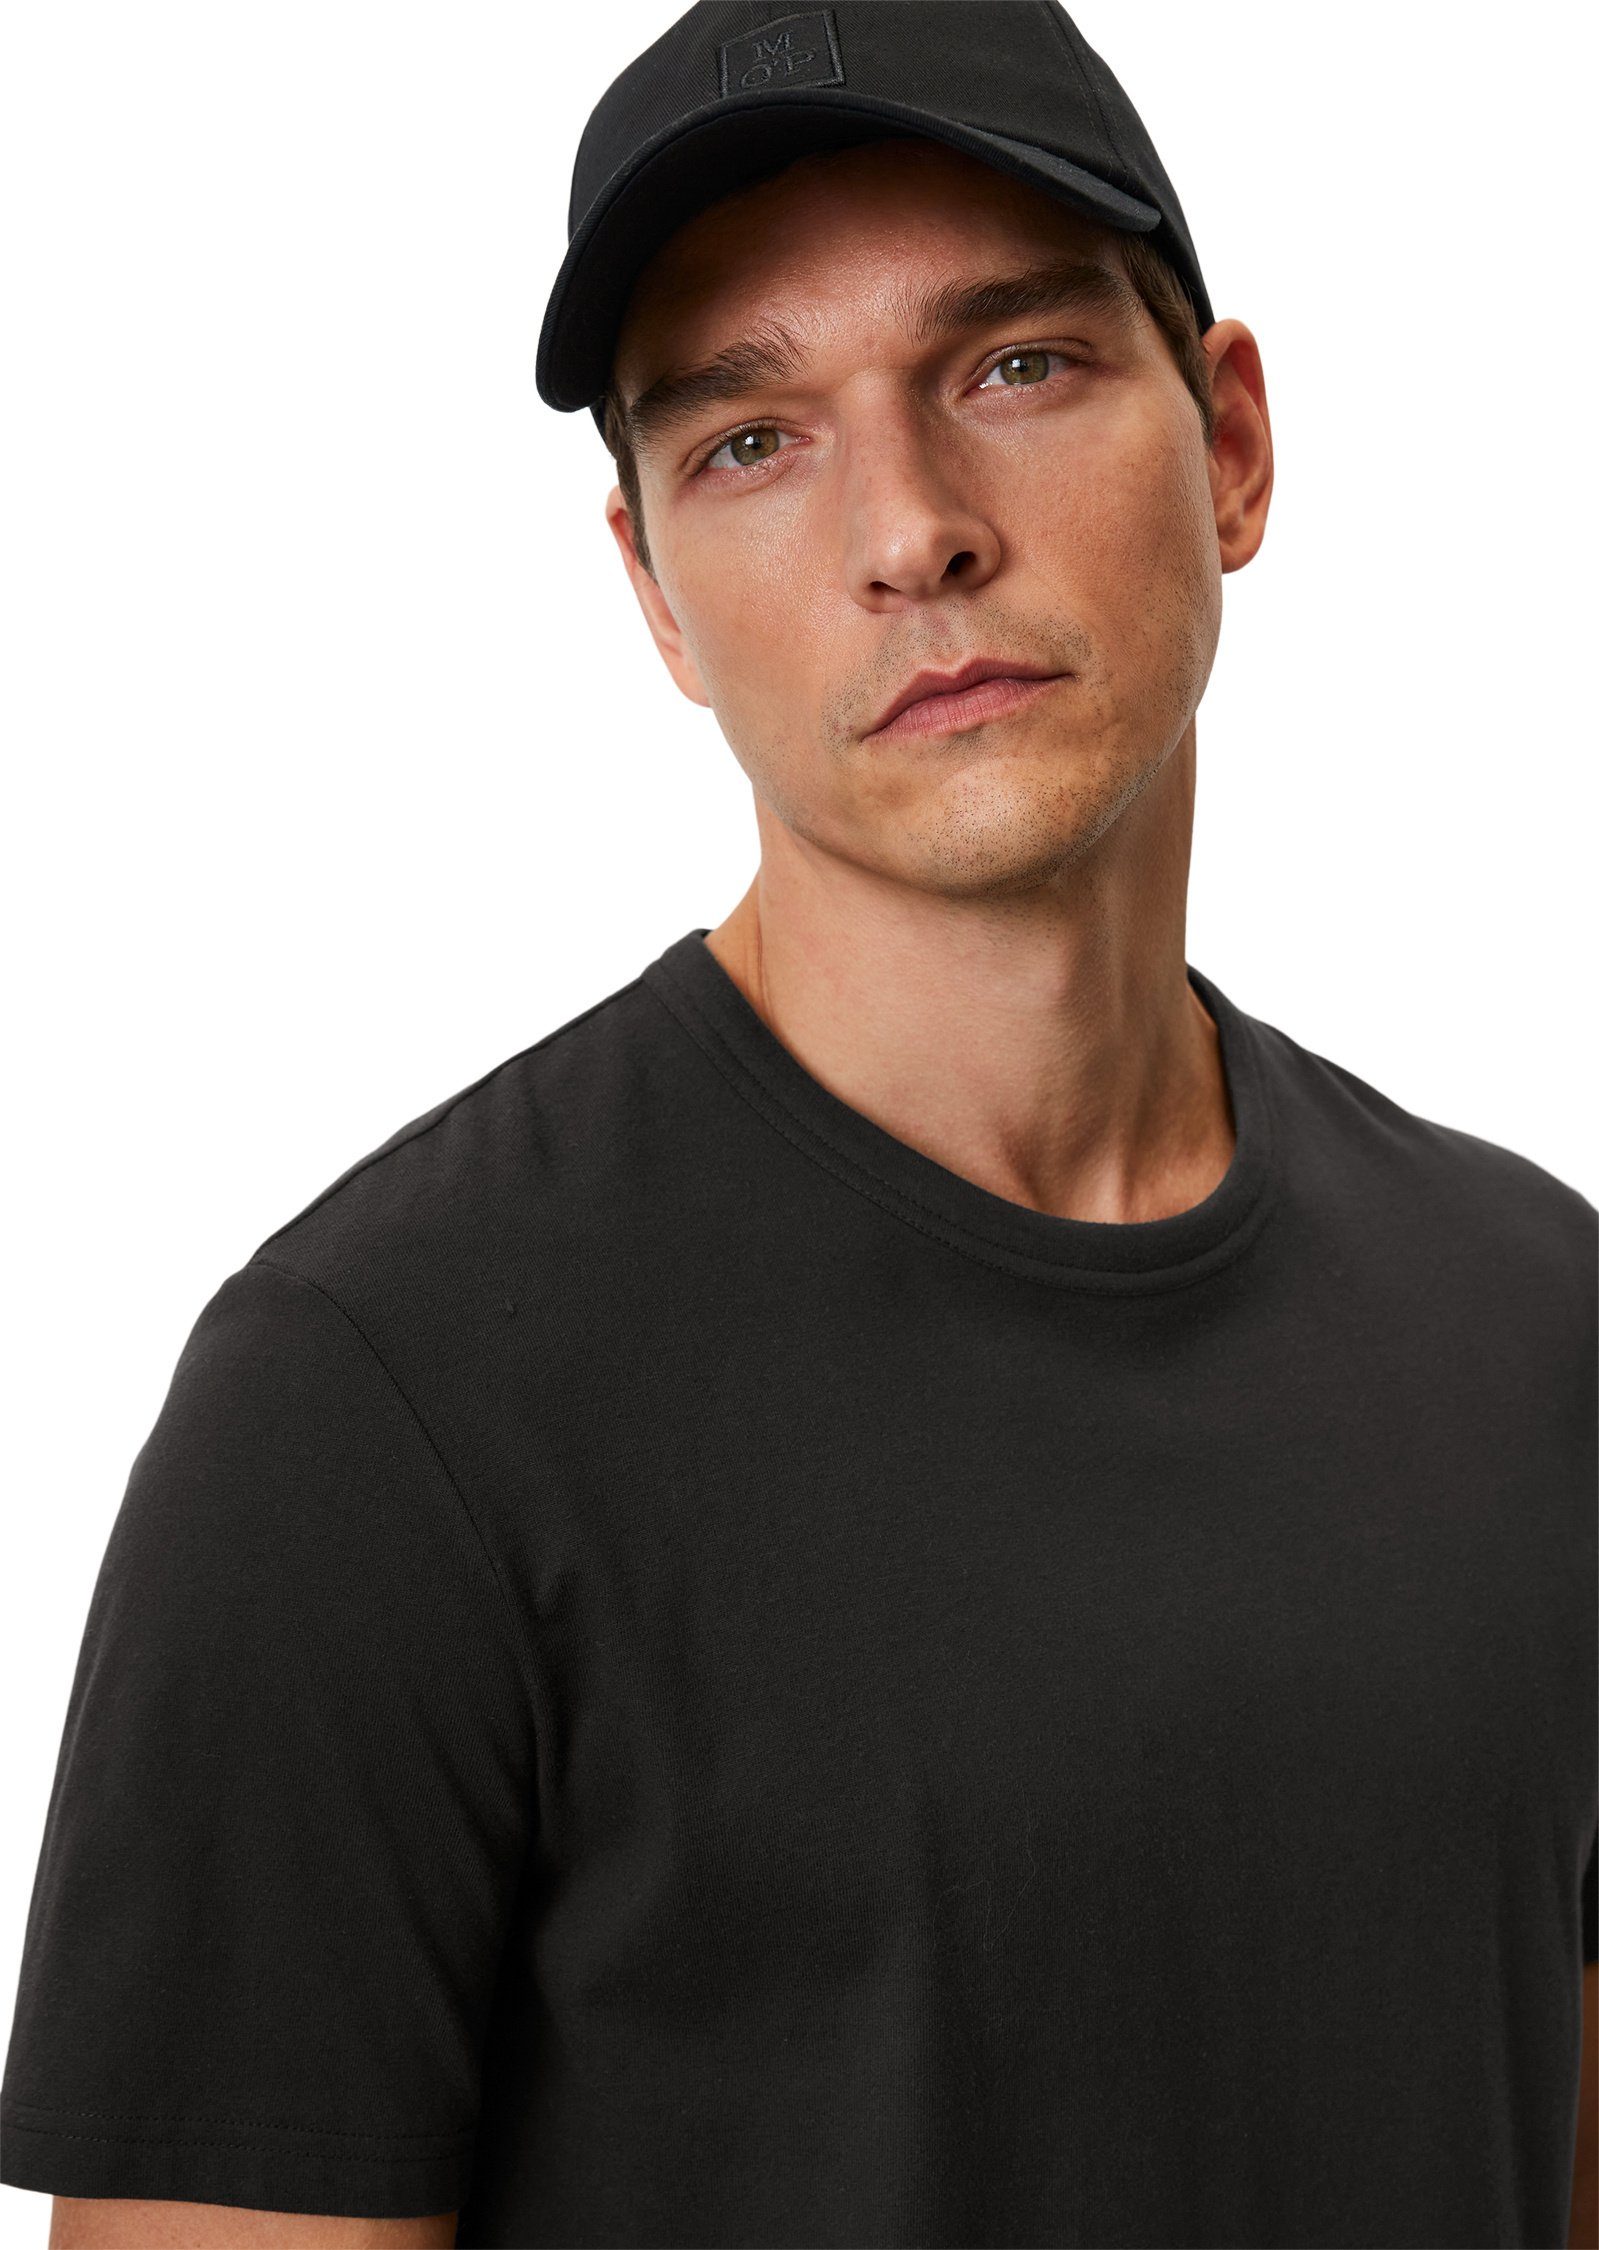 Marc O'Polo T-Shirt aus schwarz hochwertiger Baumwolle